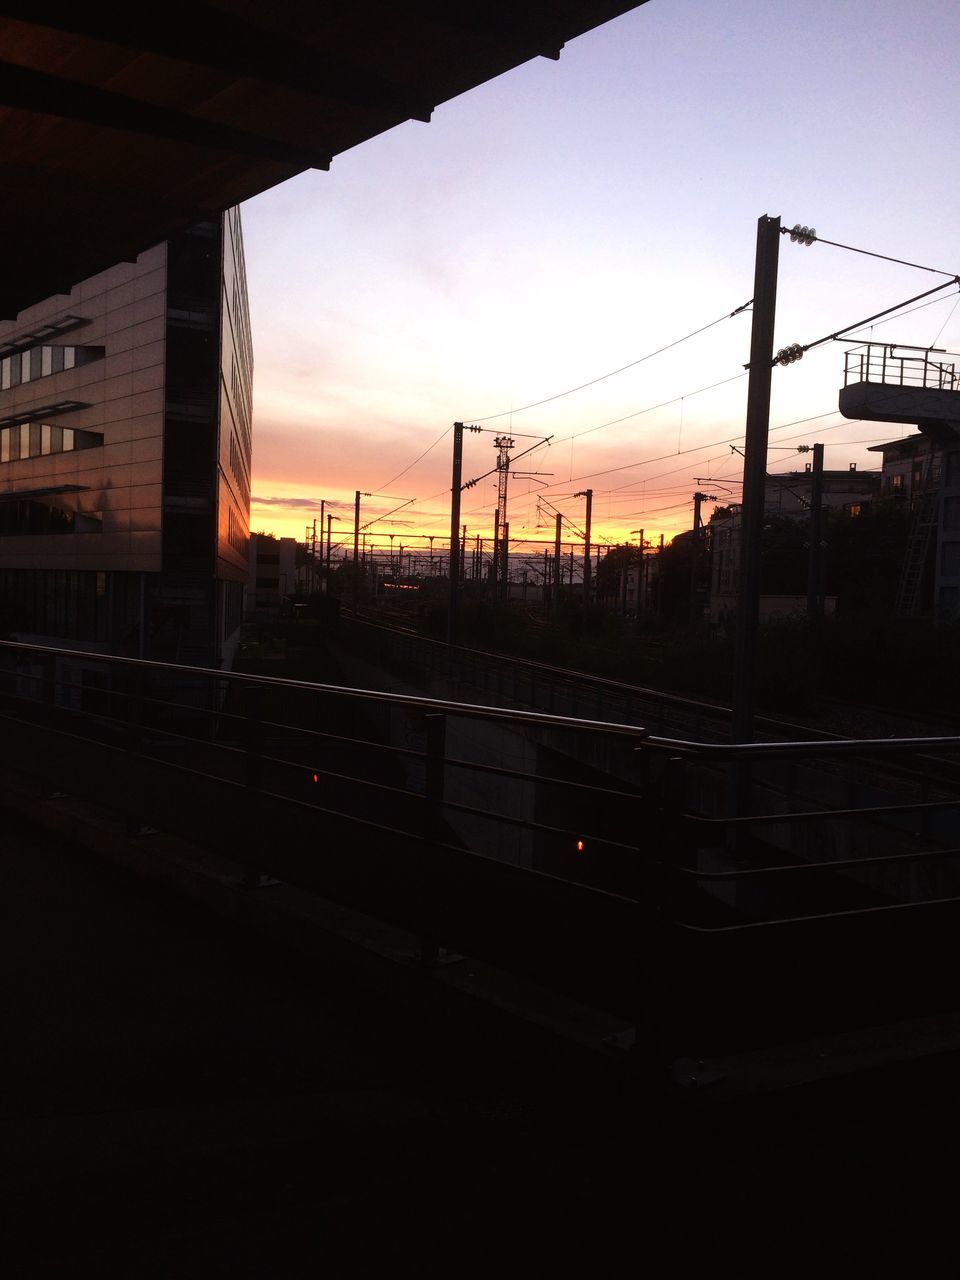 sunset, railroad track, sky, public transportation, orange color, no people, outdoors, city, cable, dark, cloud - sky, power supply, illuminated, development